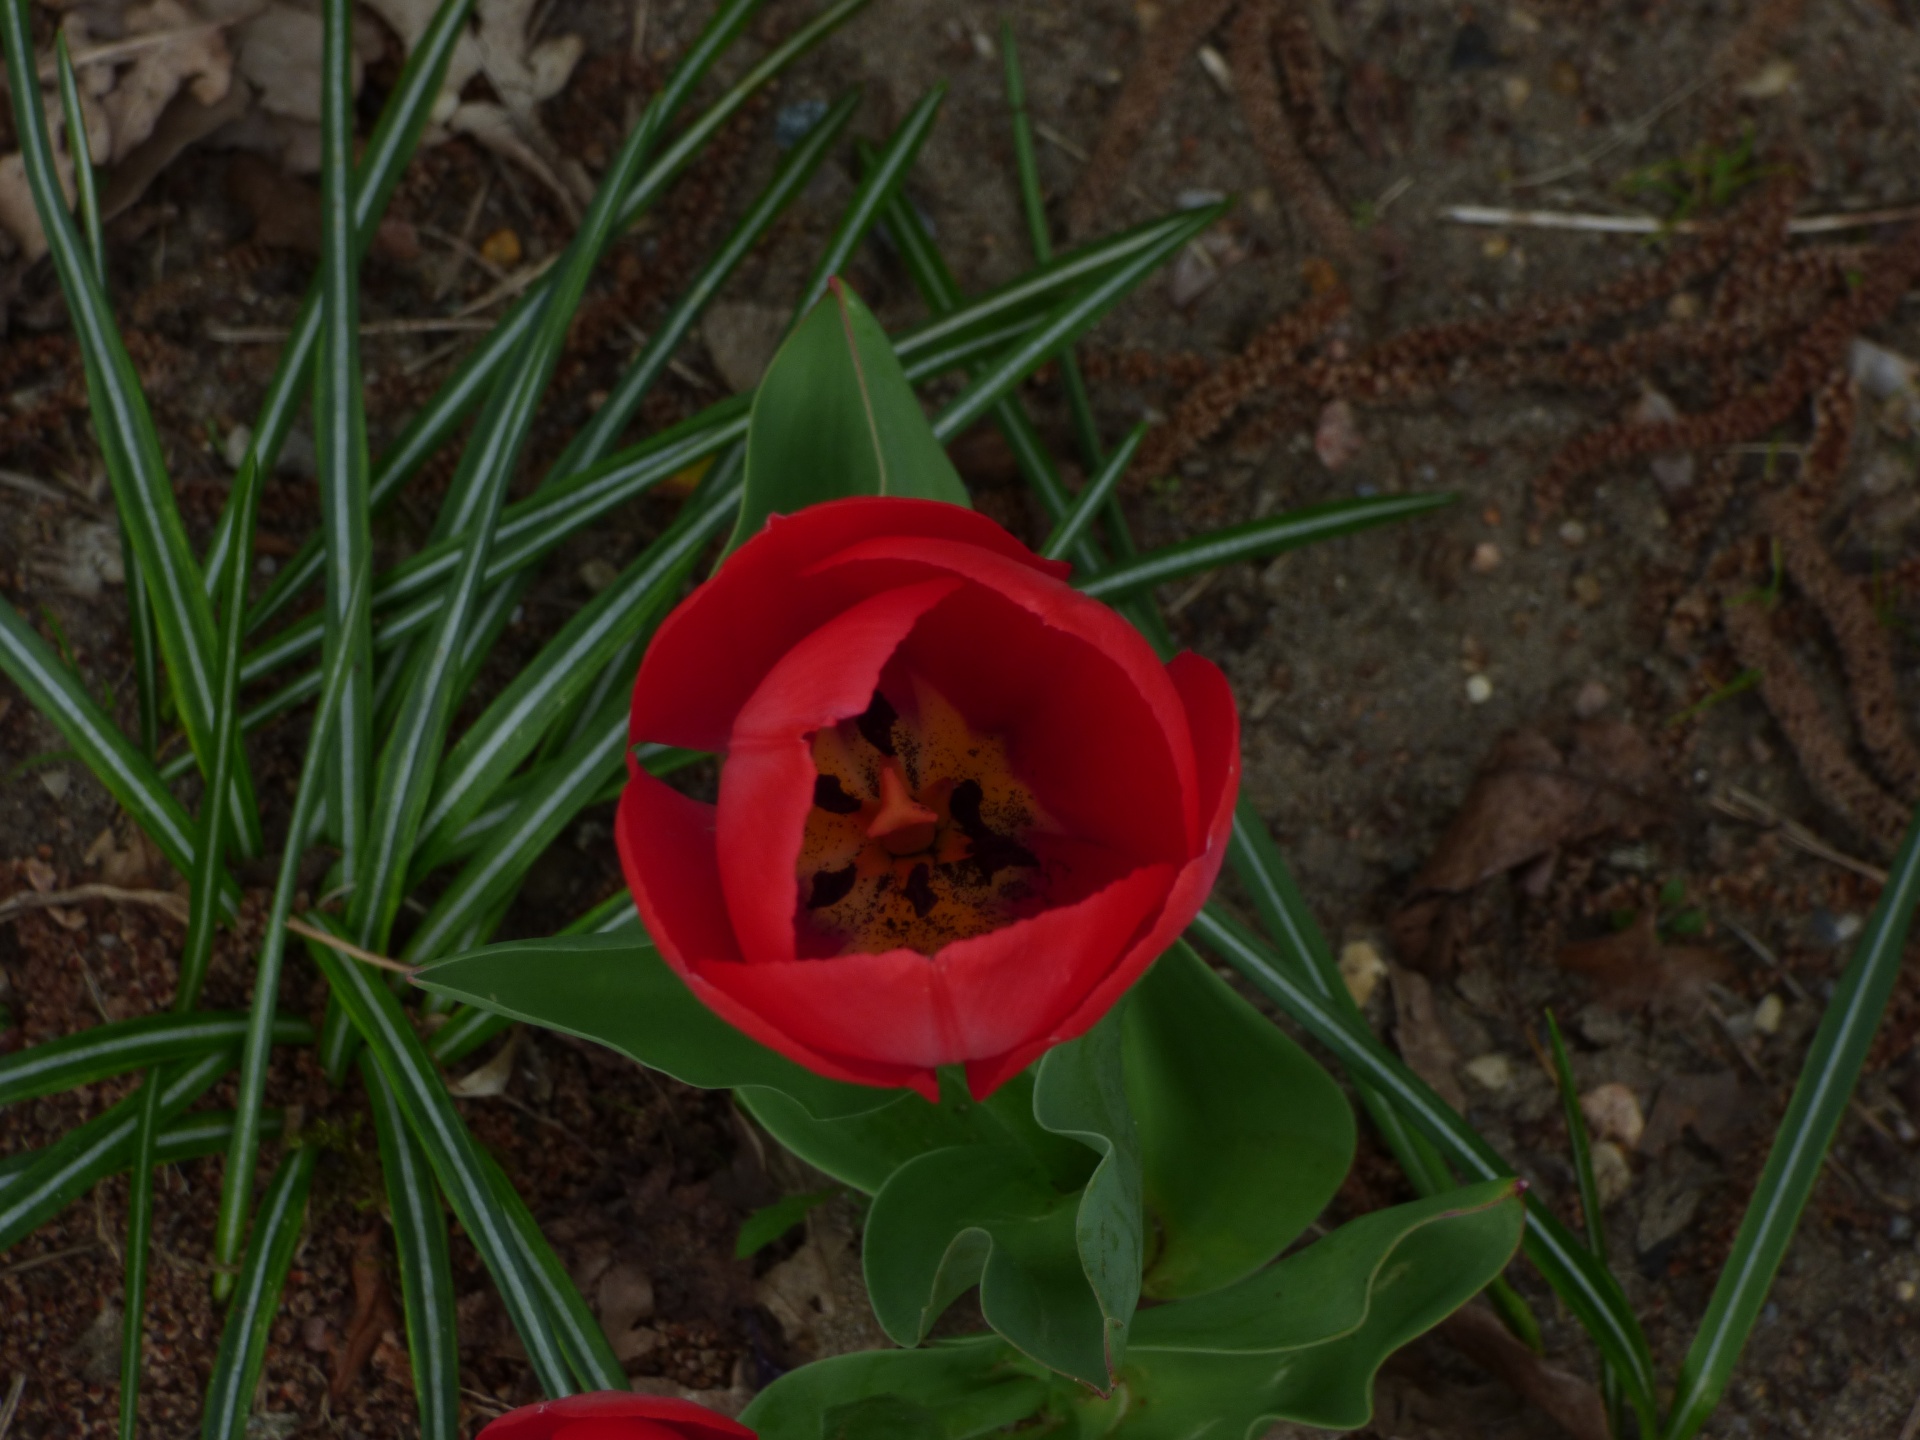 tulips flower nature free photo